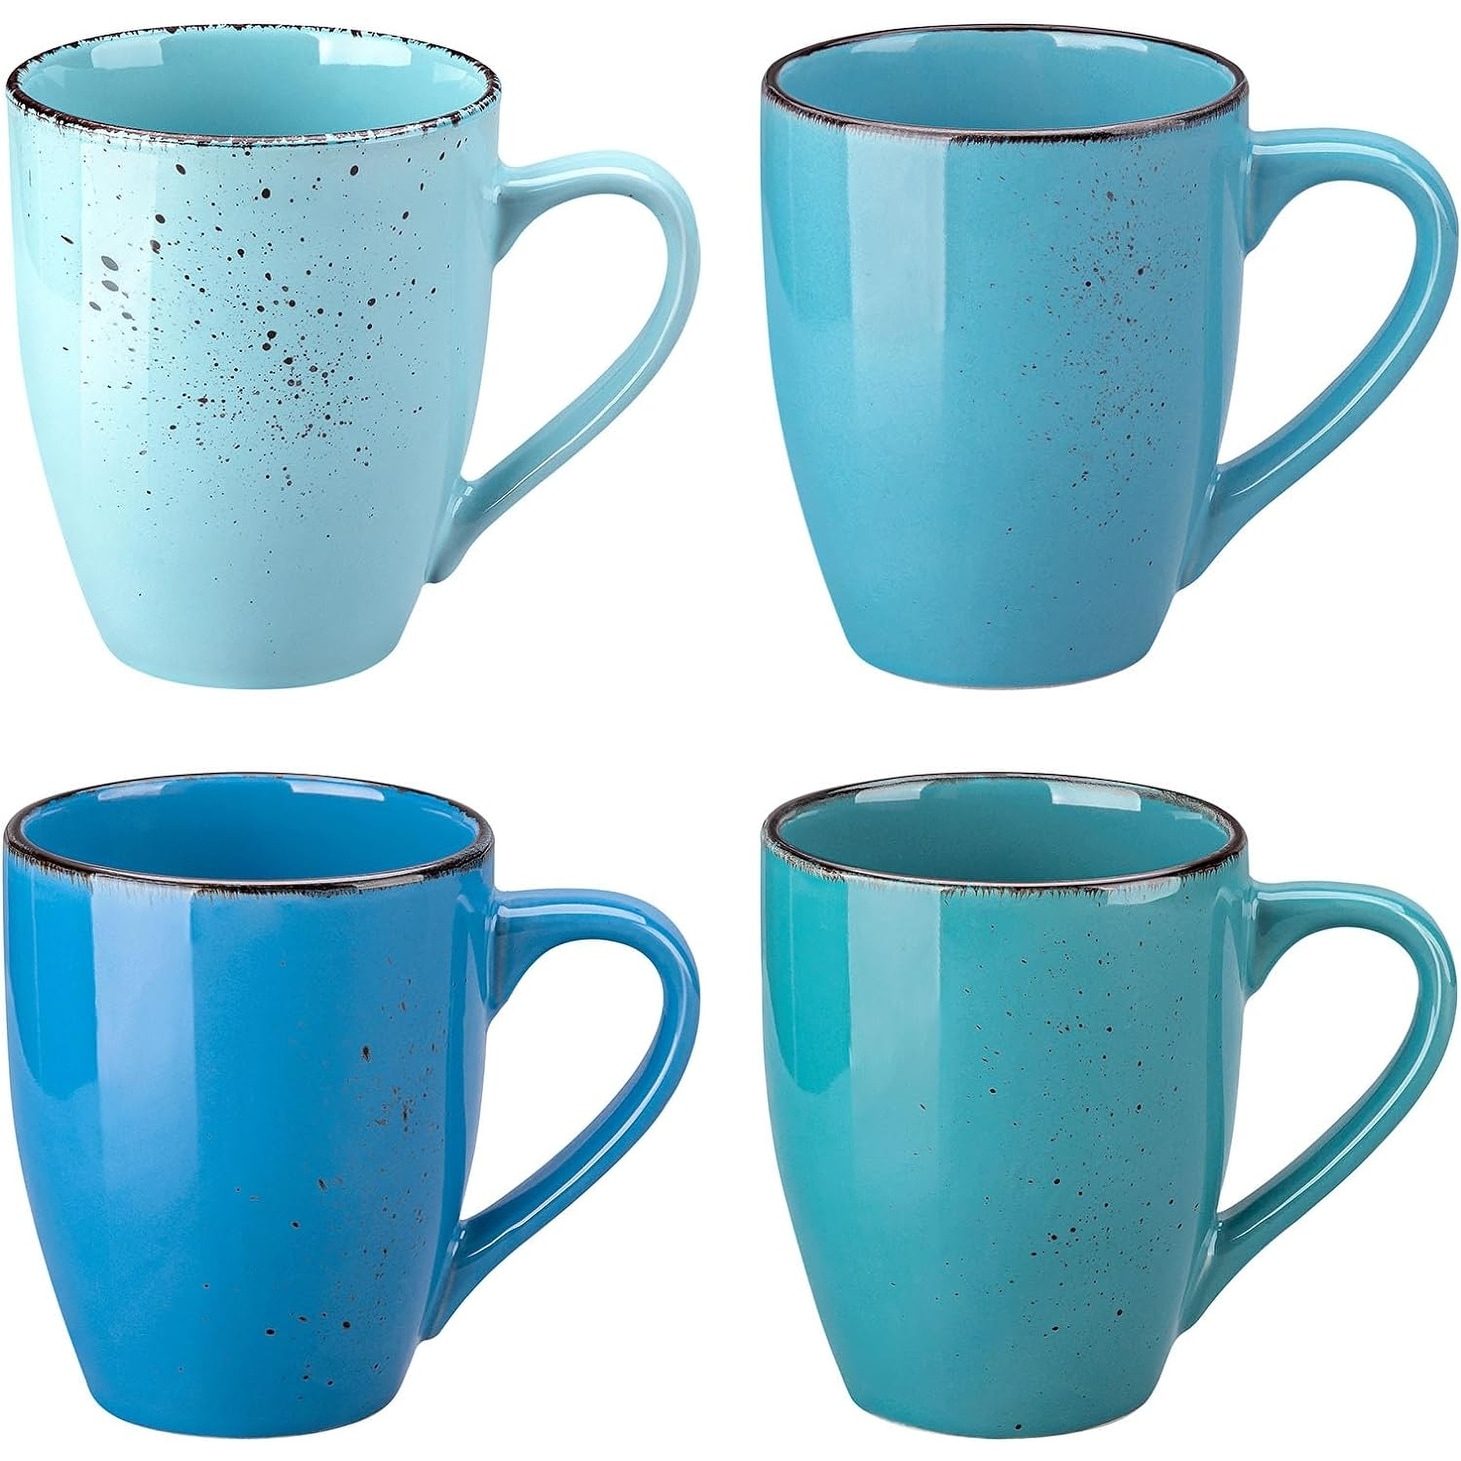 Coffee Mug Set of 4, Ceramic 12 Oz Coffee Cups